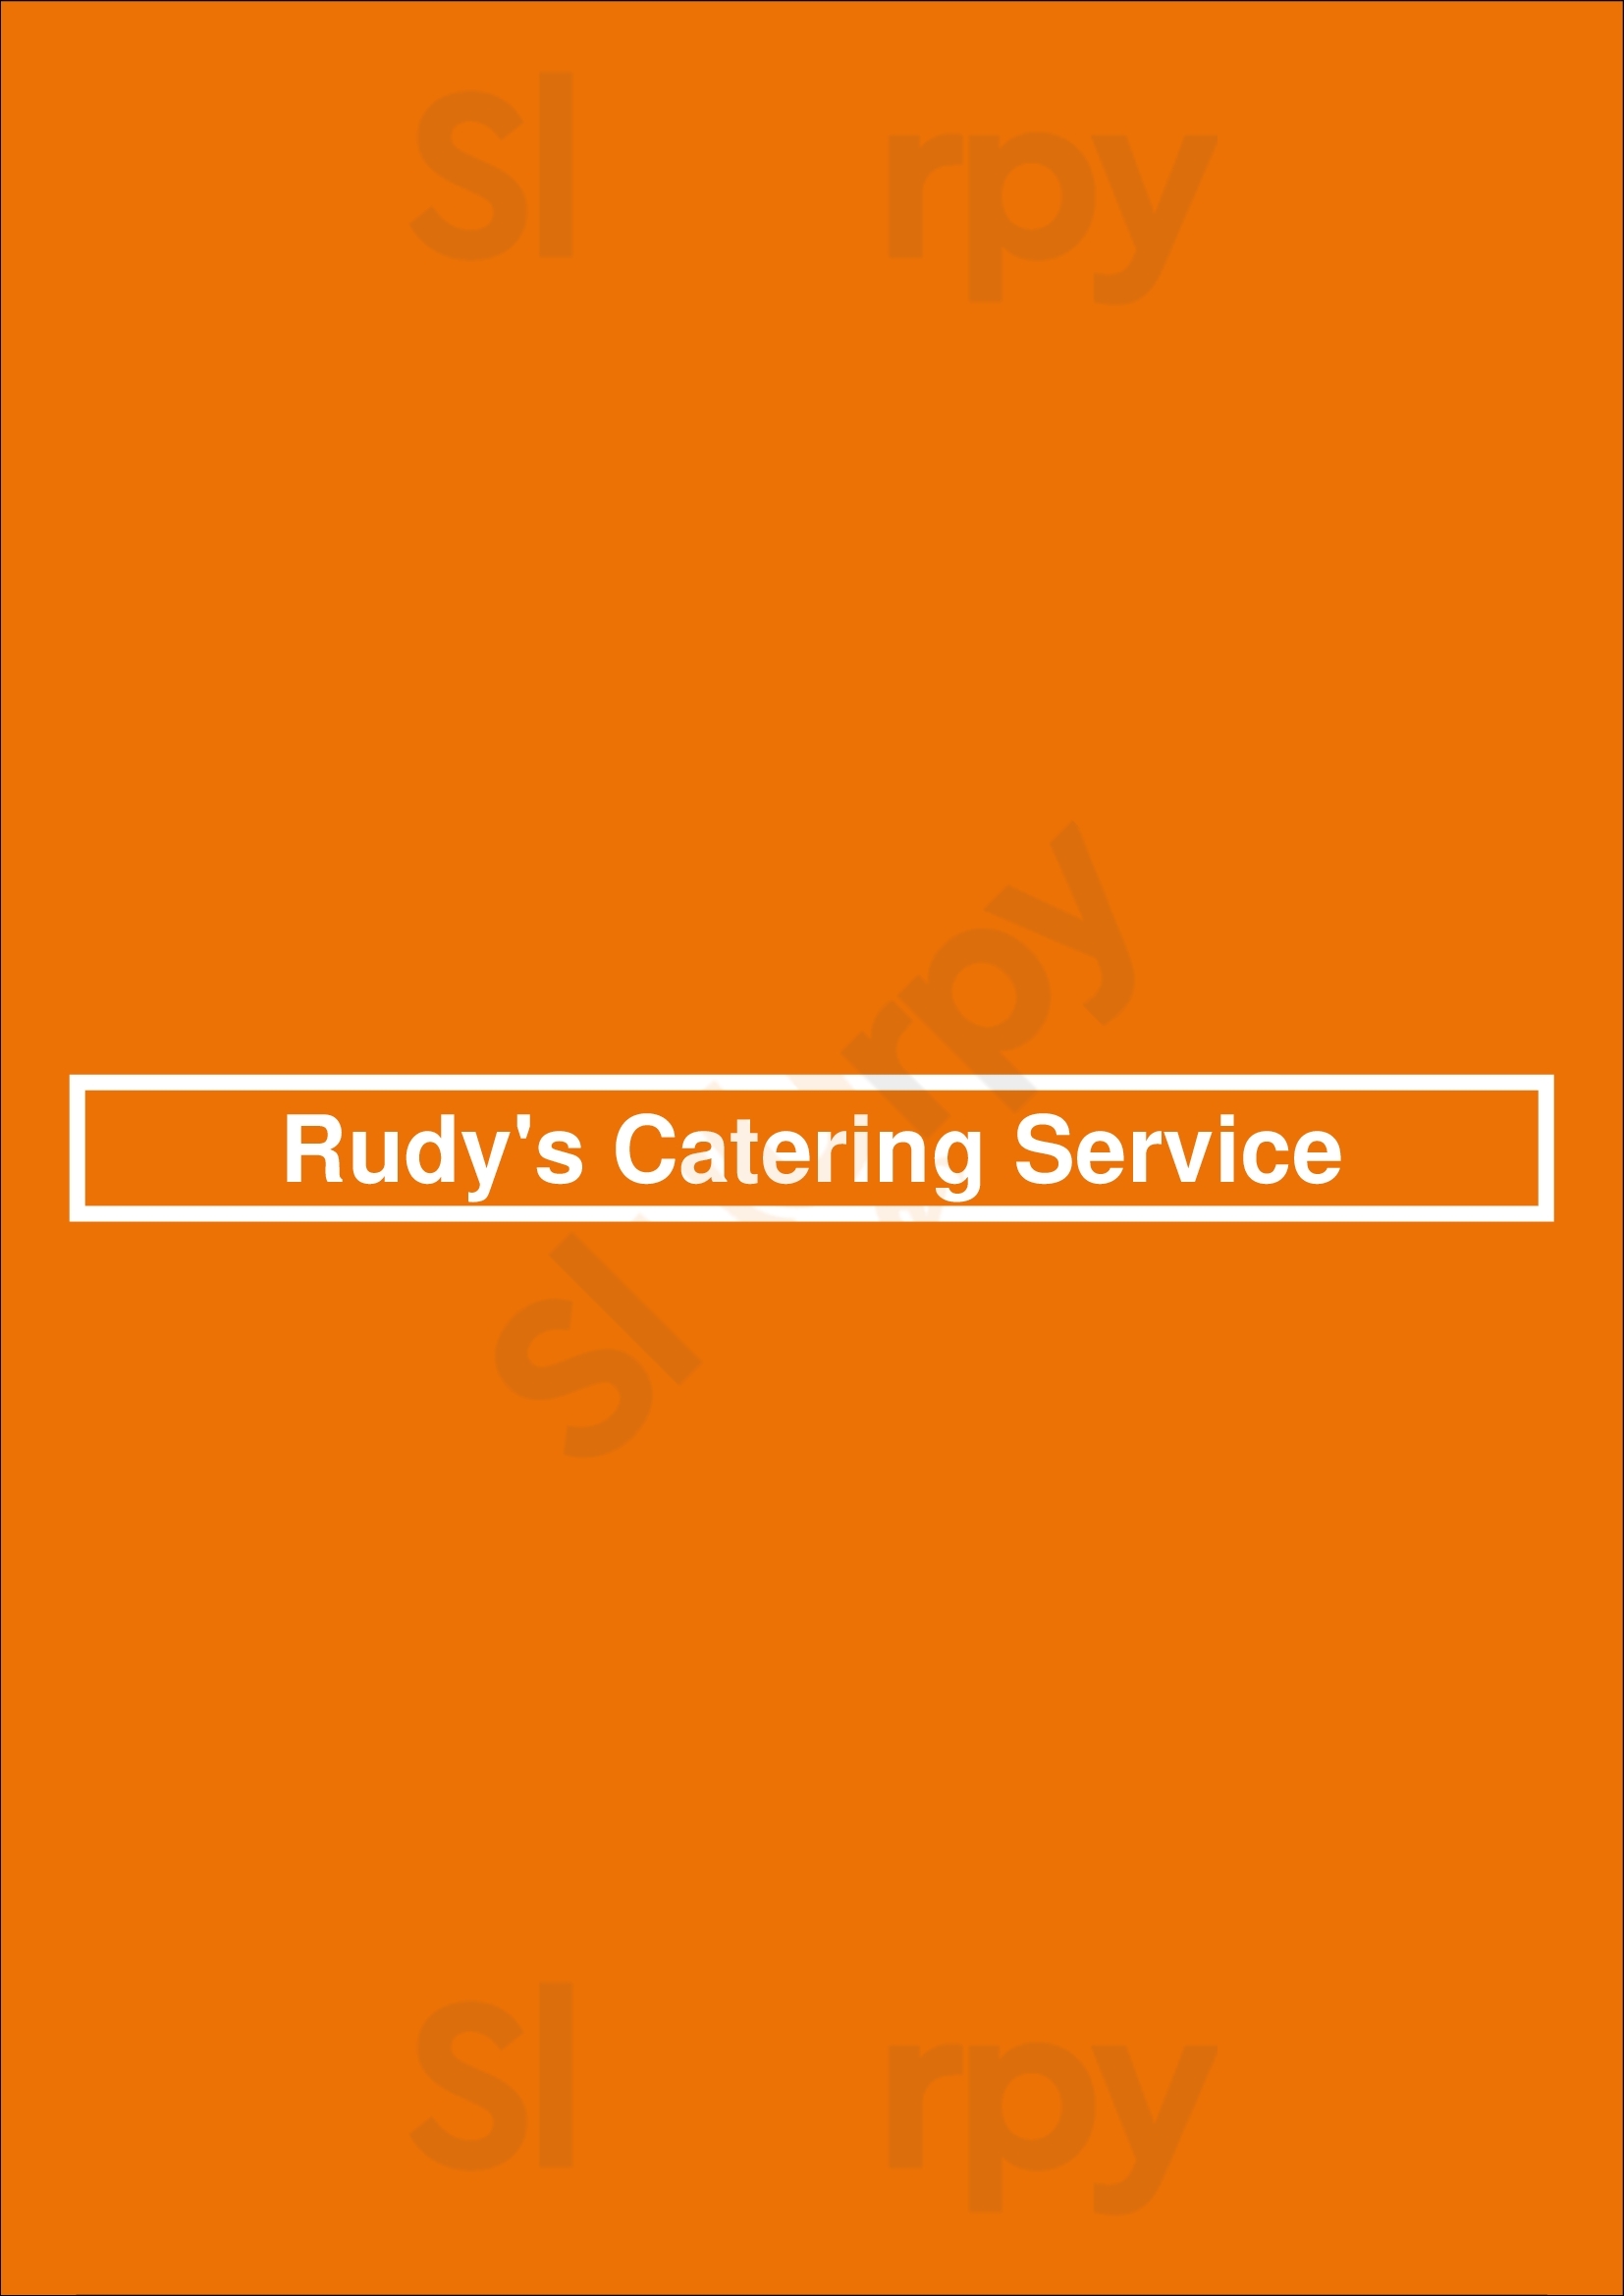 Rudy's Catering Service Halifax Menu - 1